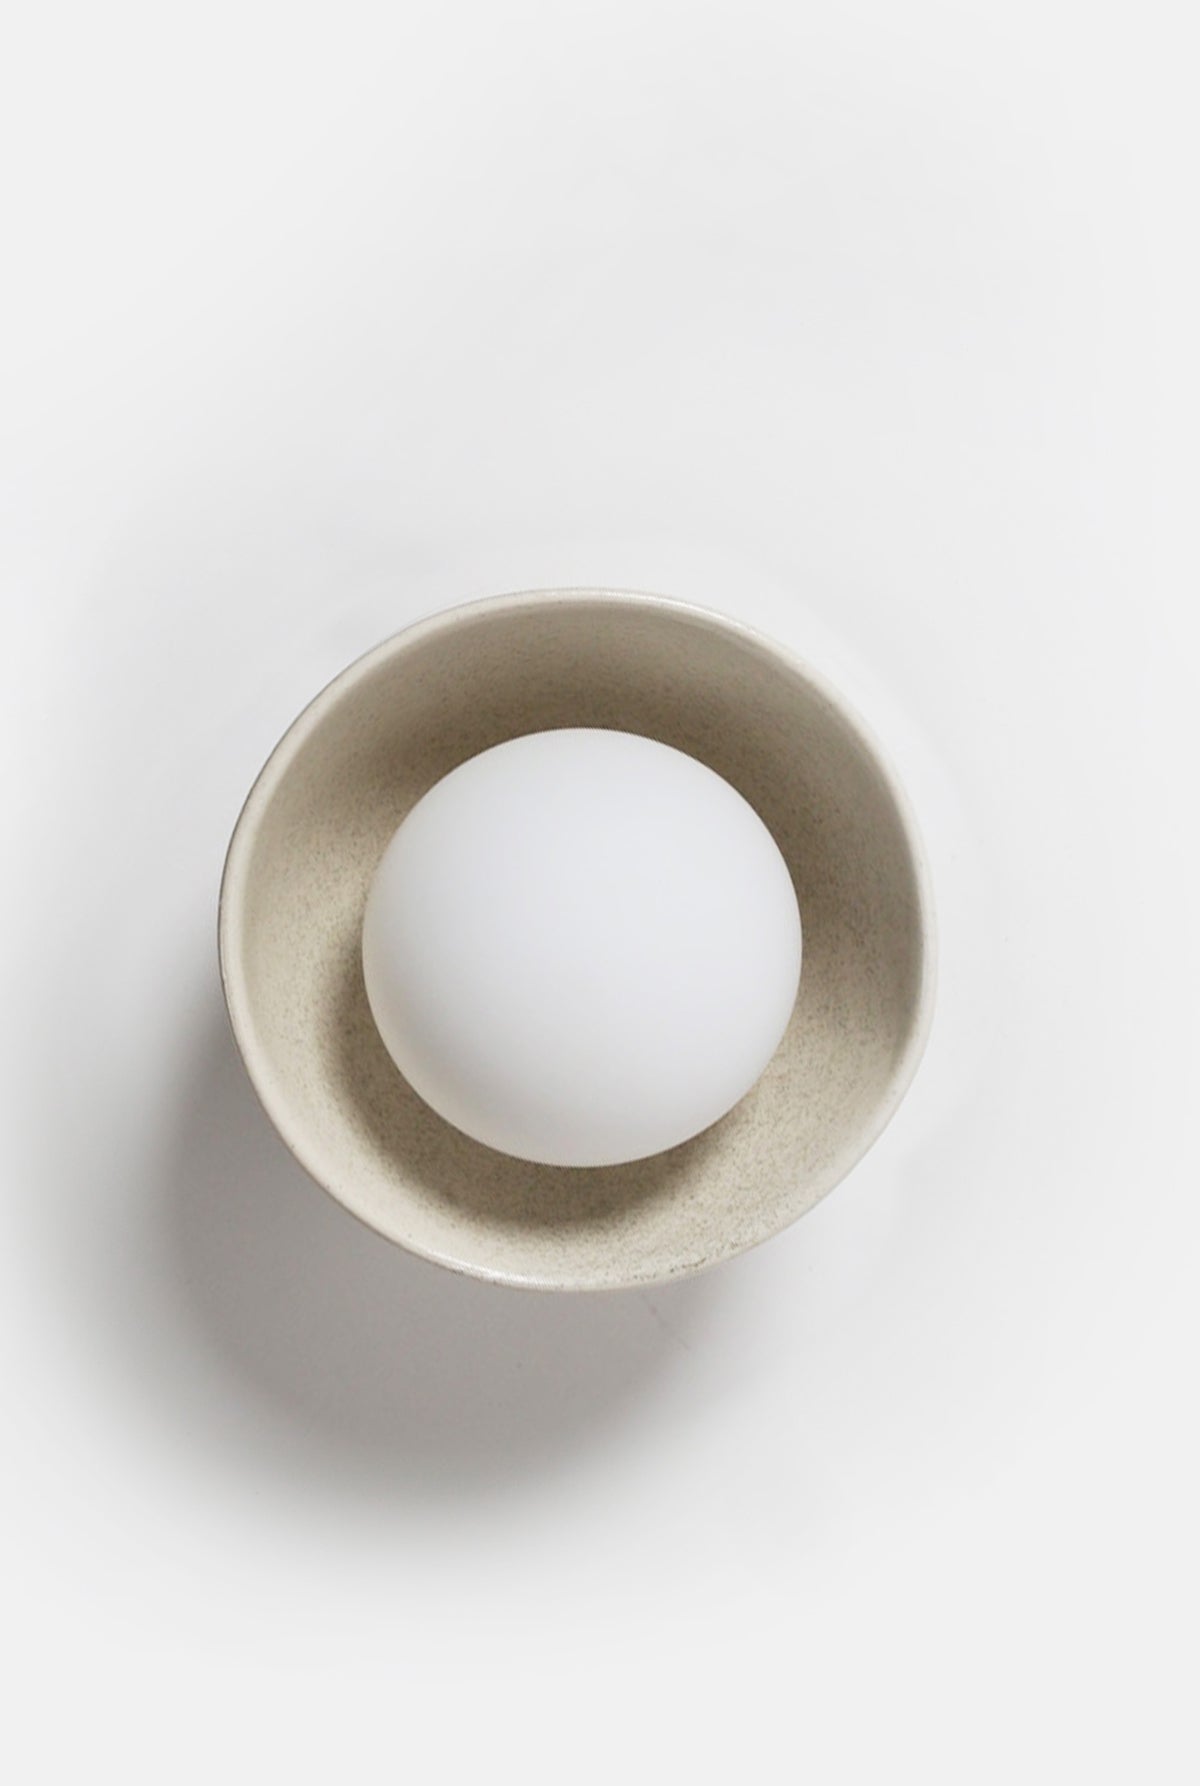 Ceramic Wall Bowl Sconce Light / Poppyseed